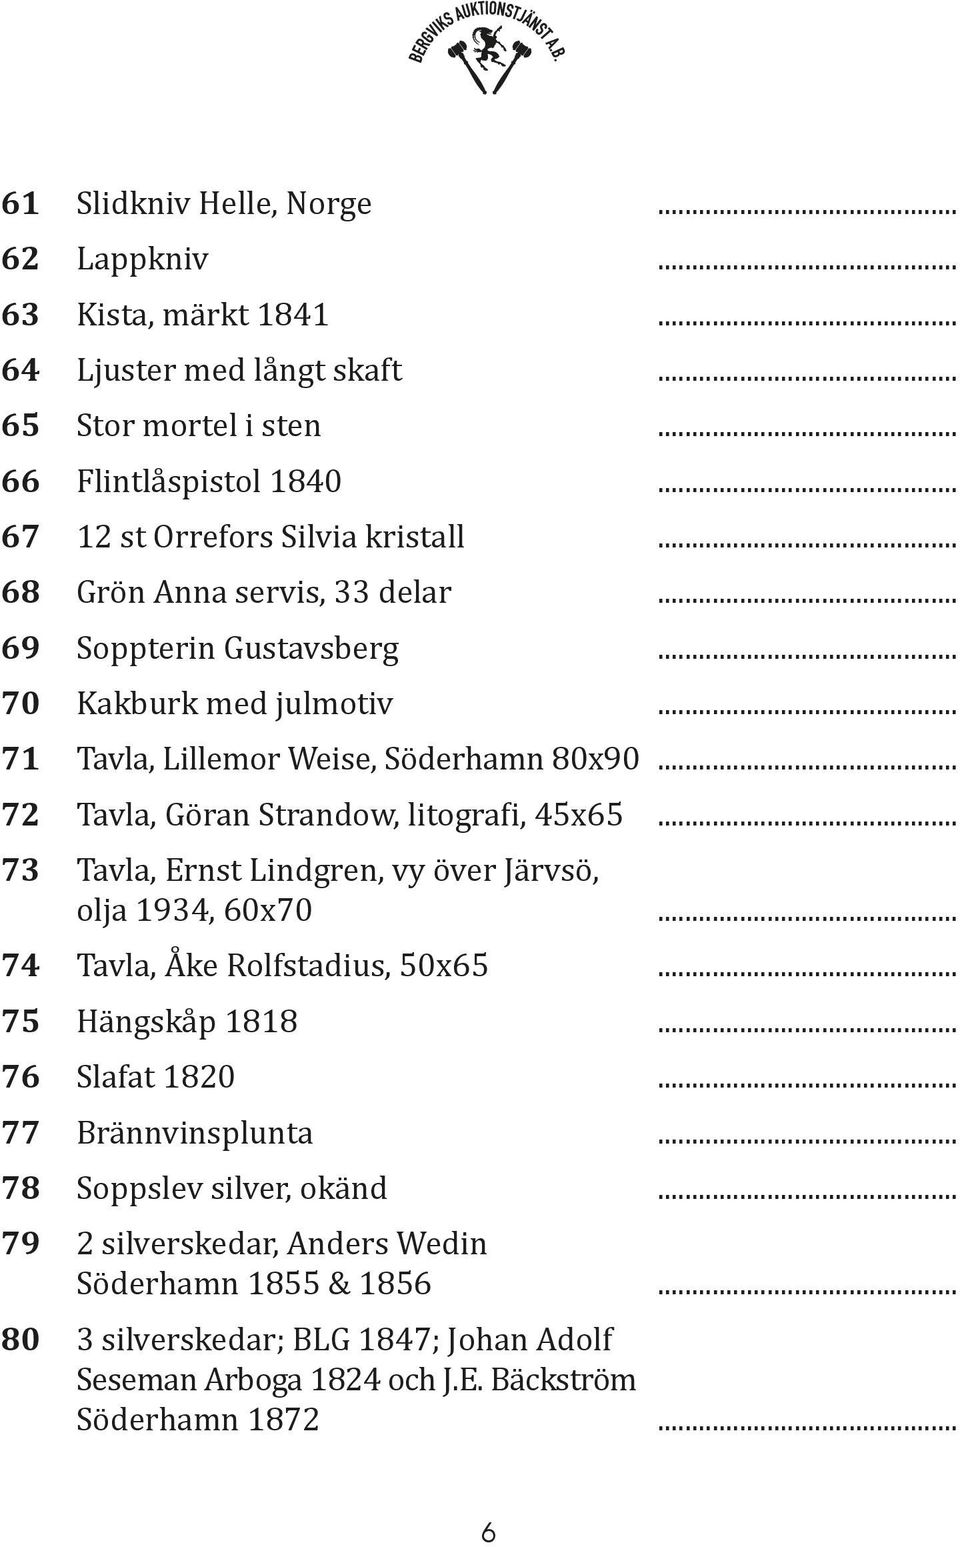 .. 72 Tavla, Göran Strandow, litografi, 45x65... 73 Tavla, Ernst Lindgren, vy över Järvsö, olja 1934, 60x70... 74 Tavla, Åke Rolfstadius, 50x65... 75 Hängskåp 1818.